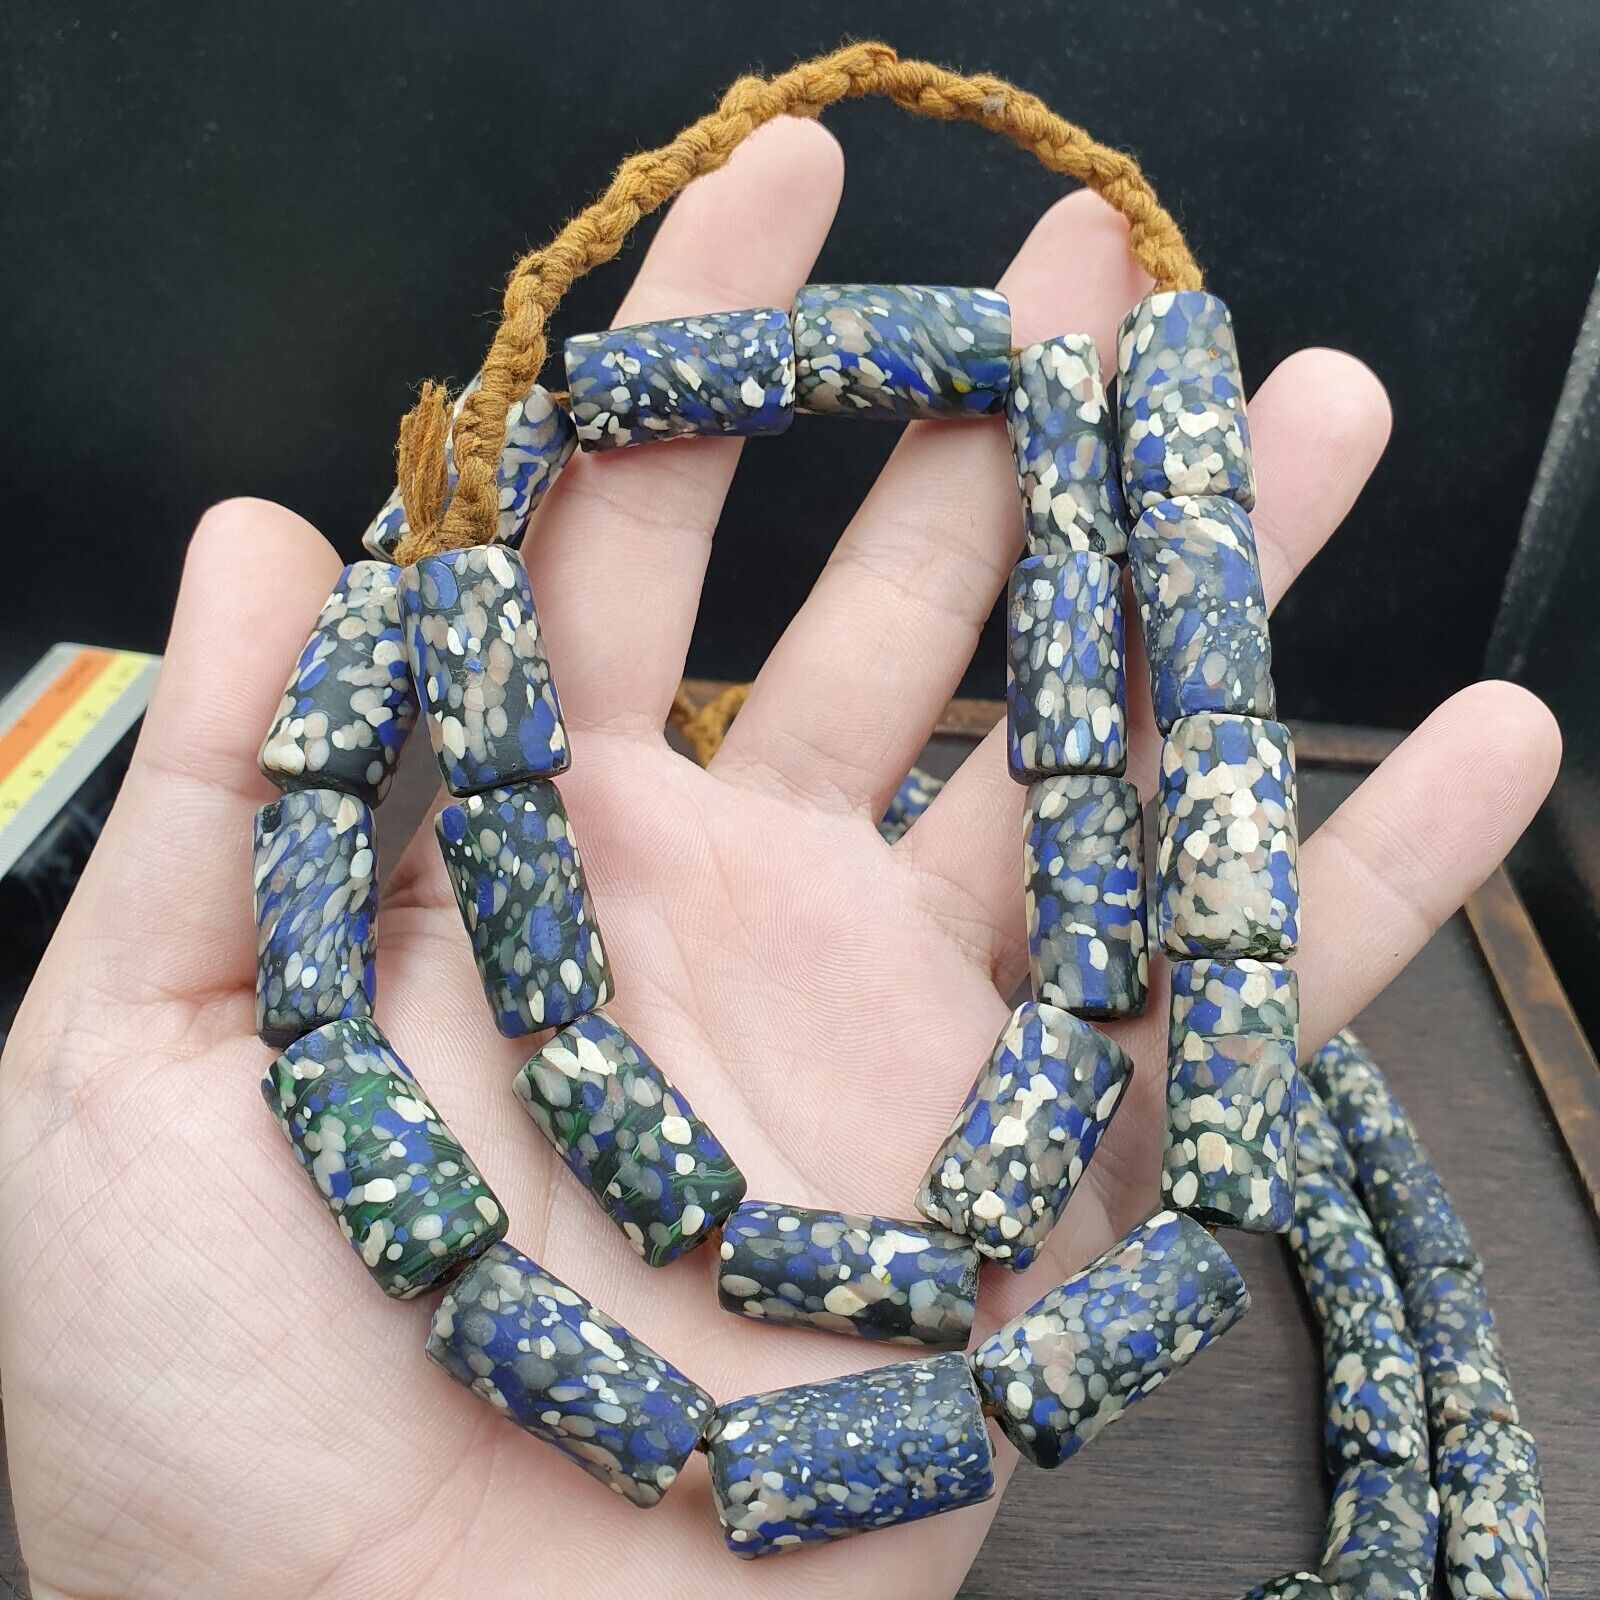 Vintage Blue, white ART Fancy GLASS beads necklace